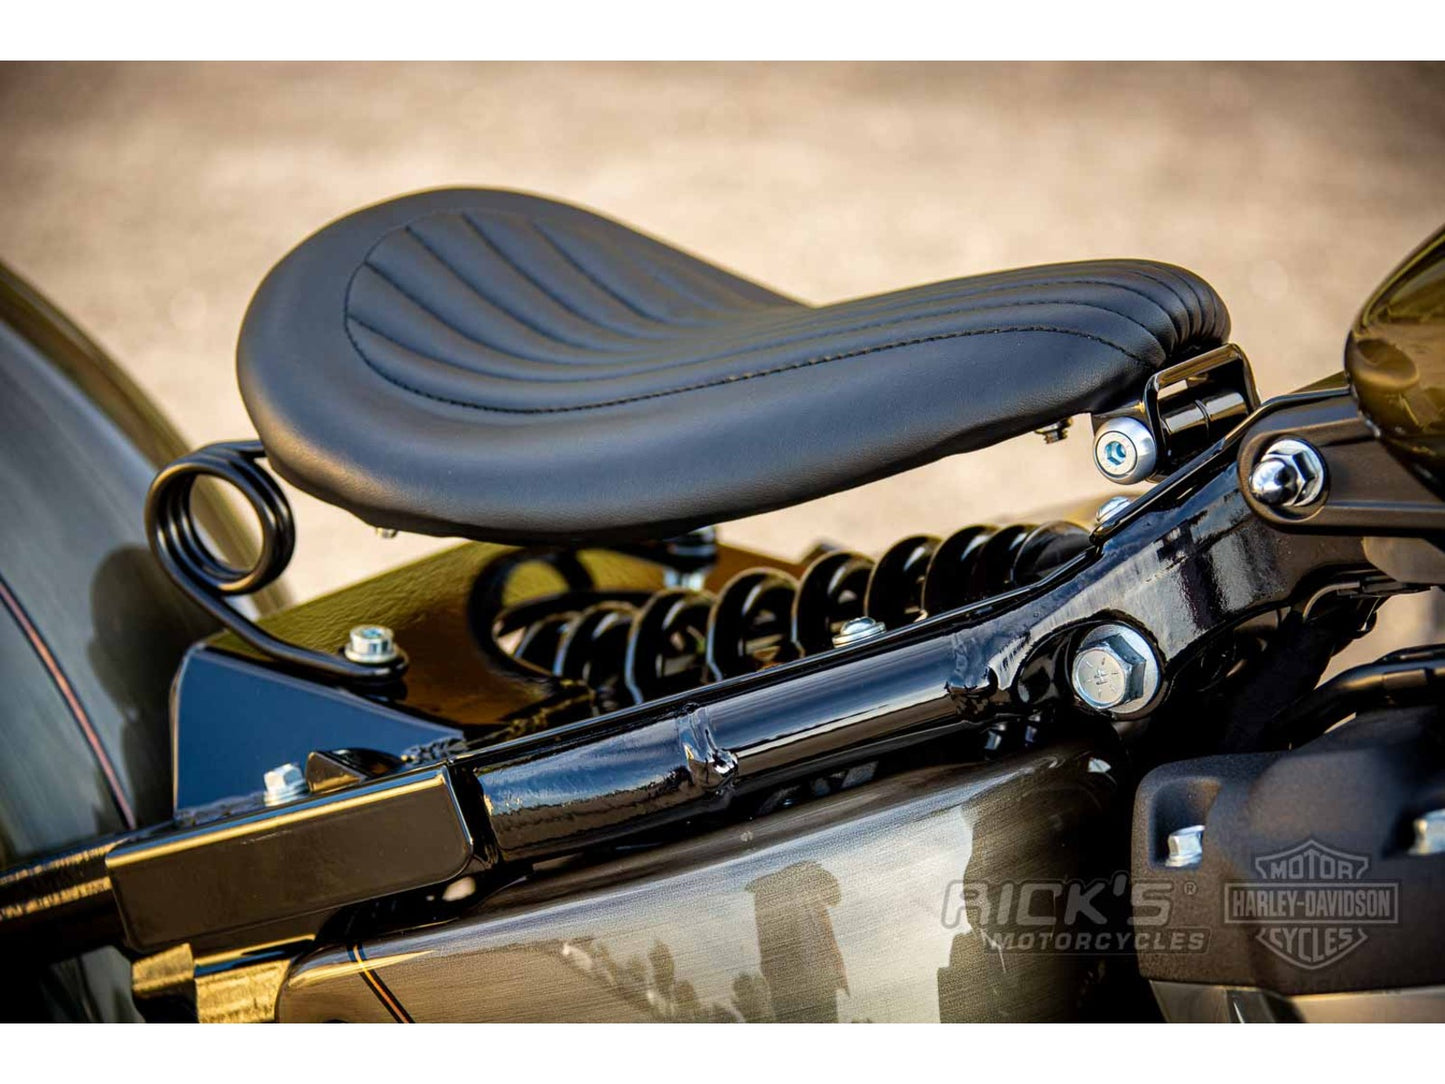 Kit Soporte Asiento Muelles Para Harley-Davidson Softail M8 Solo Seat Conversion